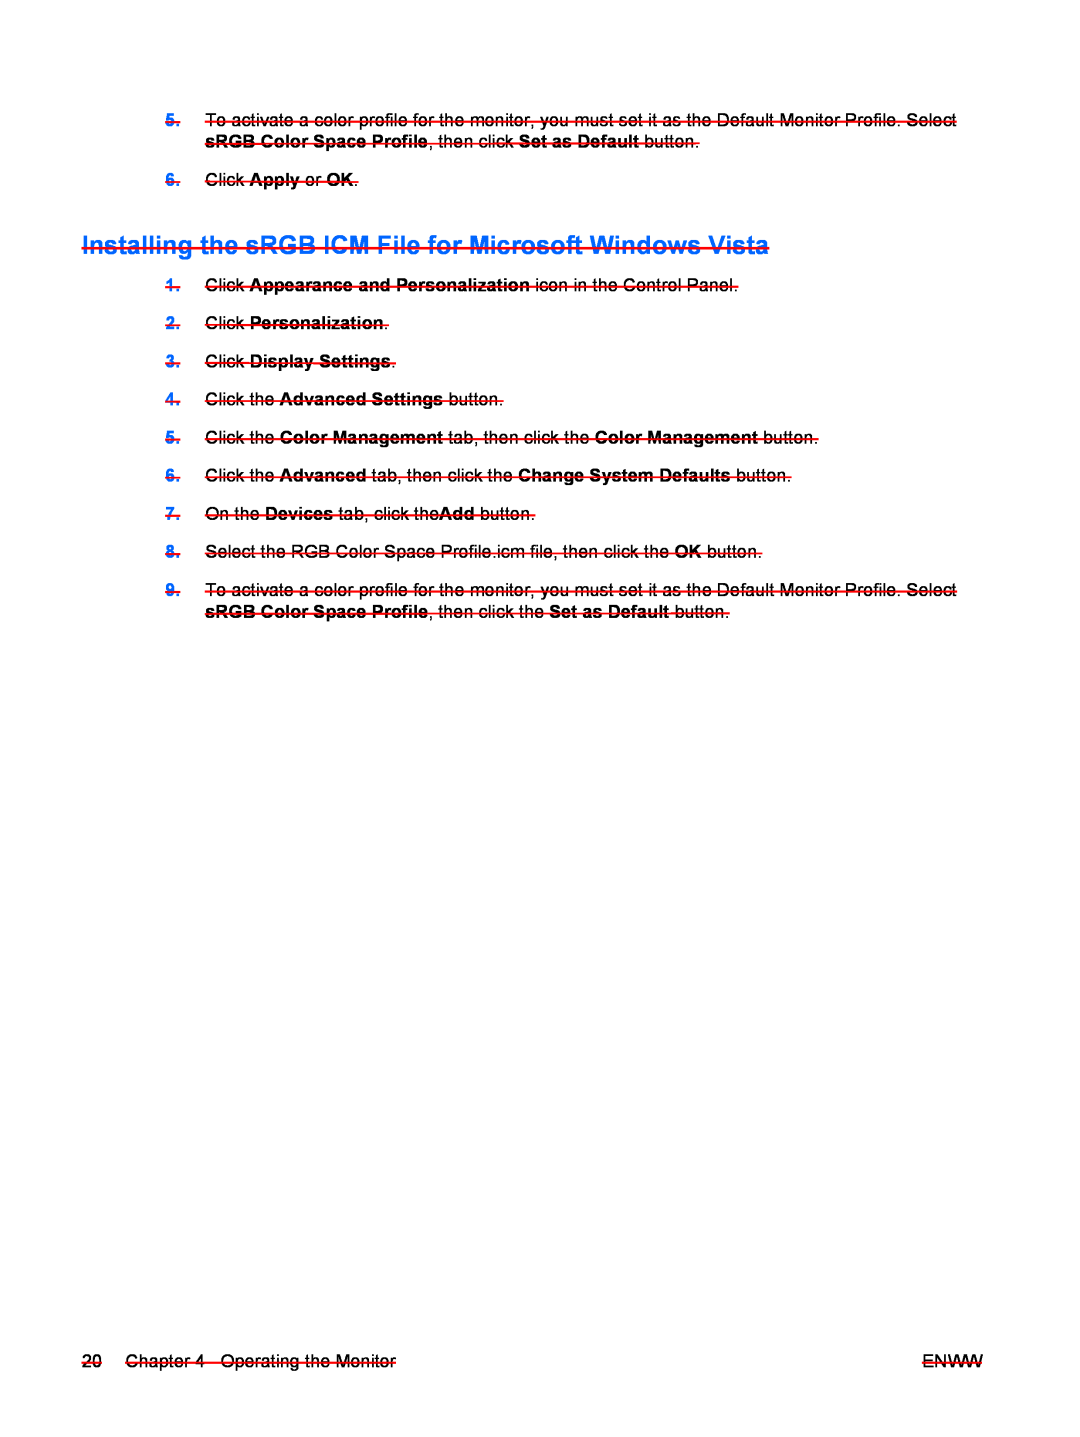 HP CQ1859s manual Installing the sRGB ICM File for Microsoft Windows Vista, Click Personalization 3. Click Display Settings 